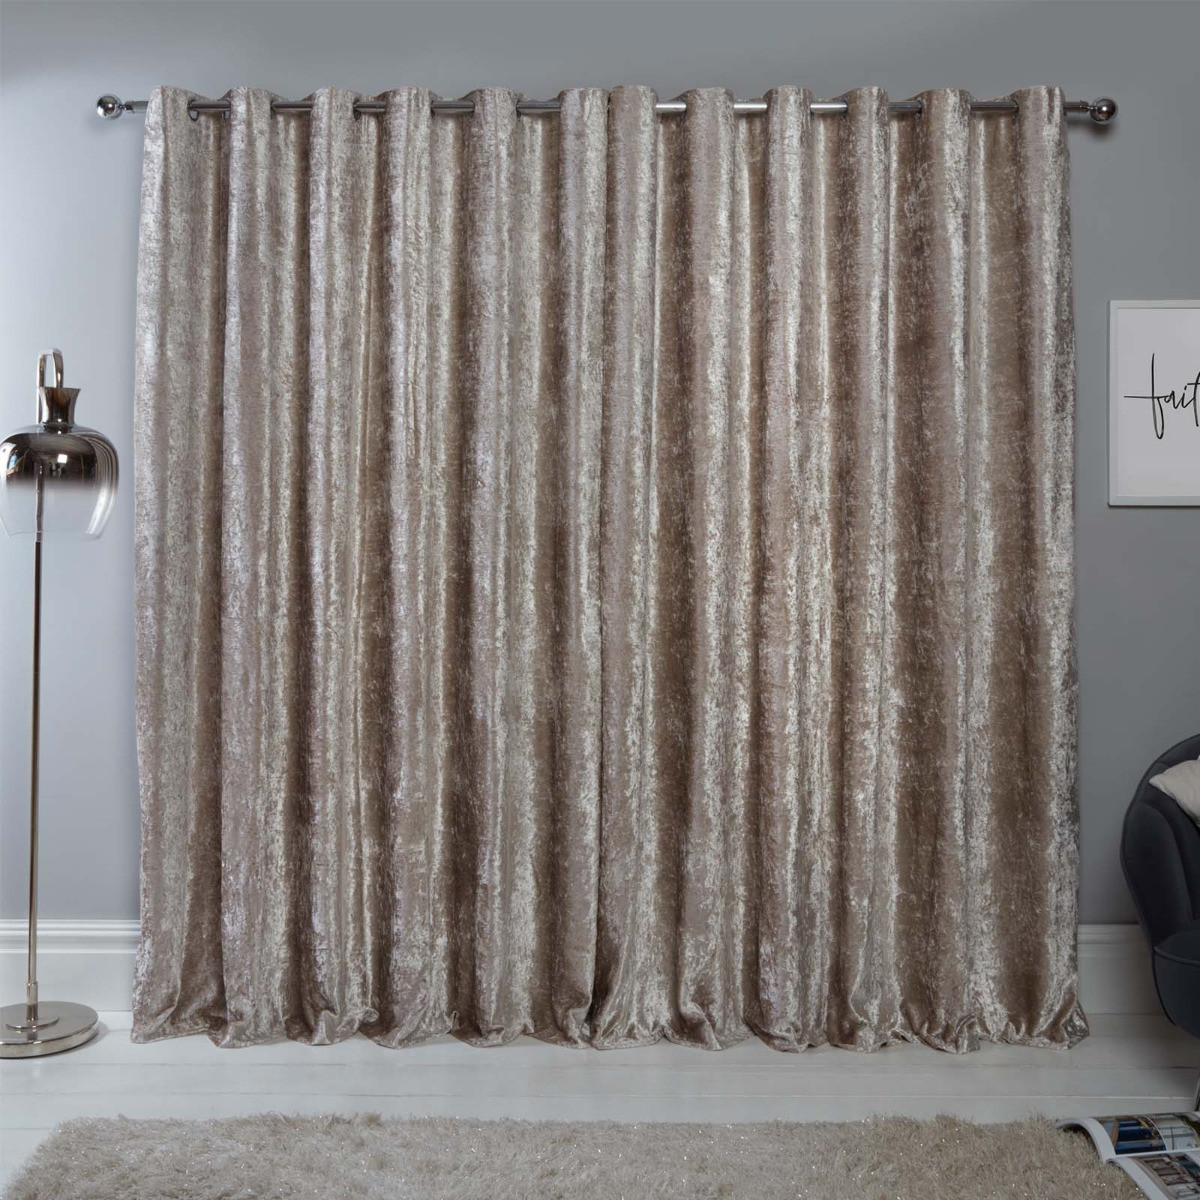 Sienna Home Crushed Velvet Eyelet Curtains - Natural Gold 66" x 72">